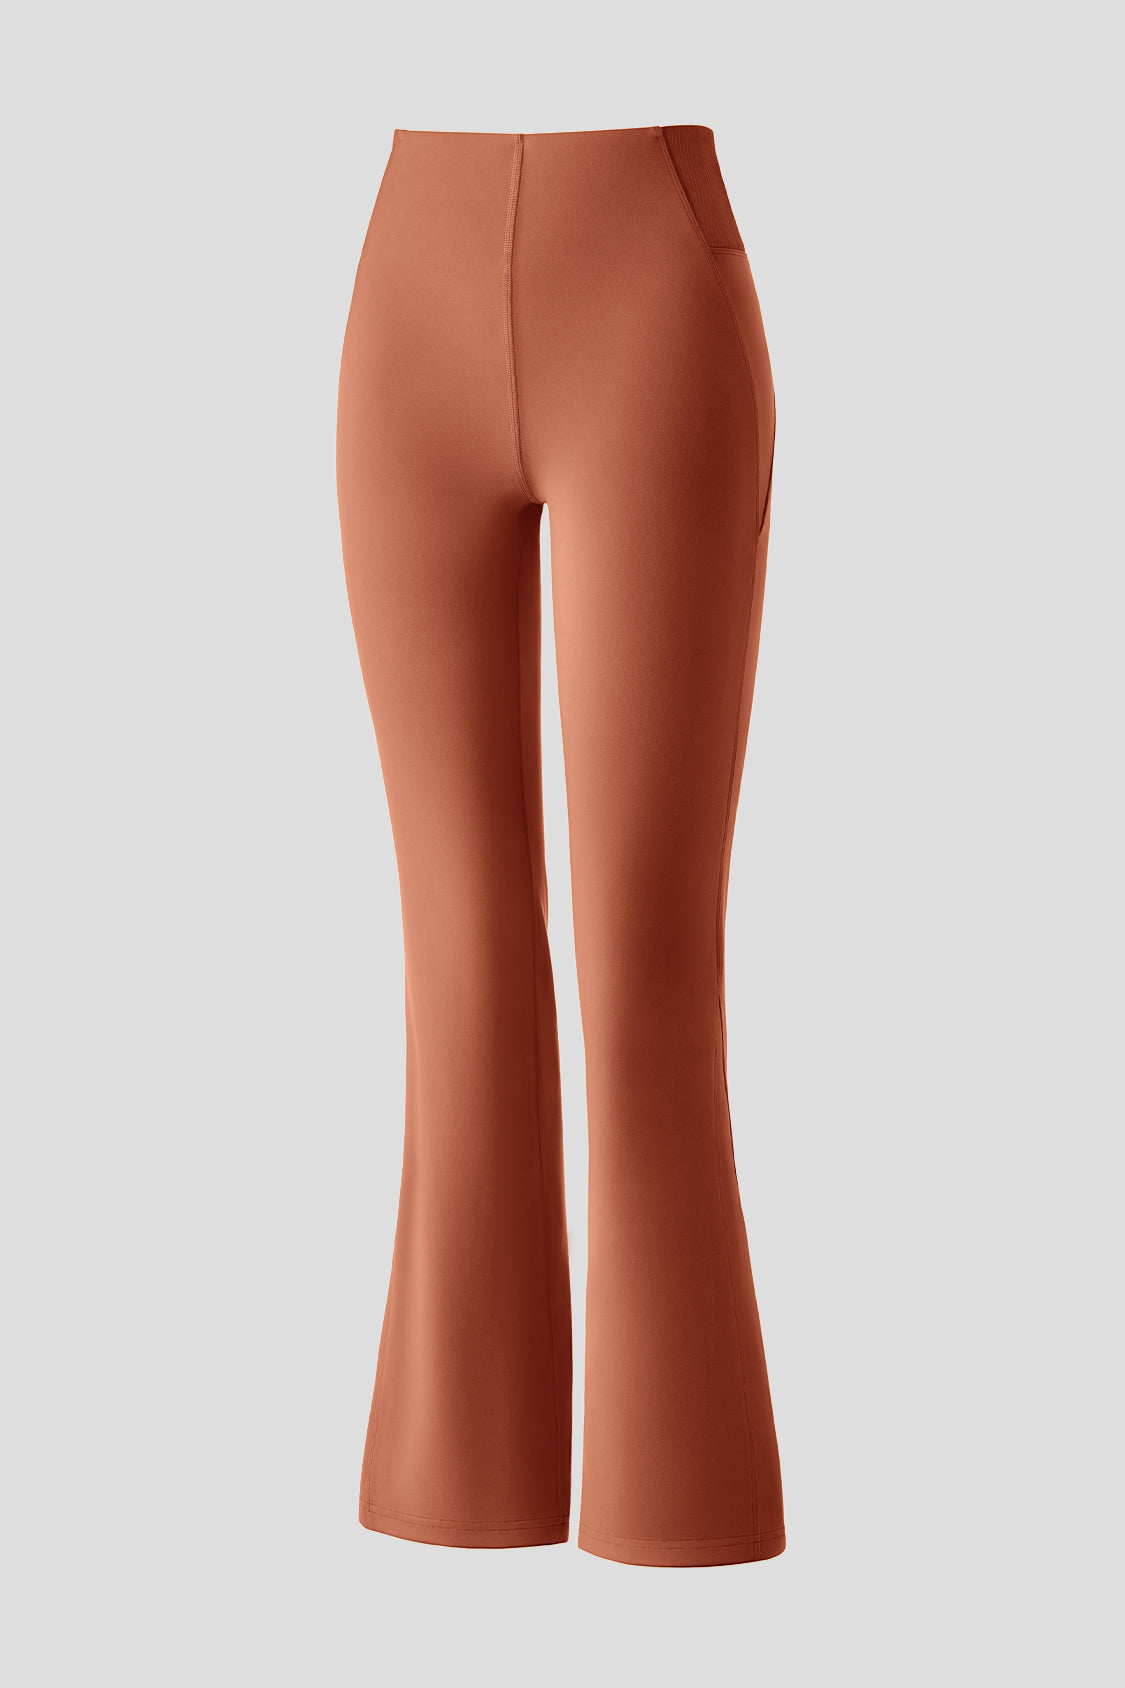 beneunder women's sun protection pants #color_warm orange brown